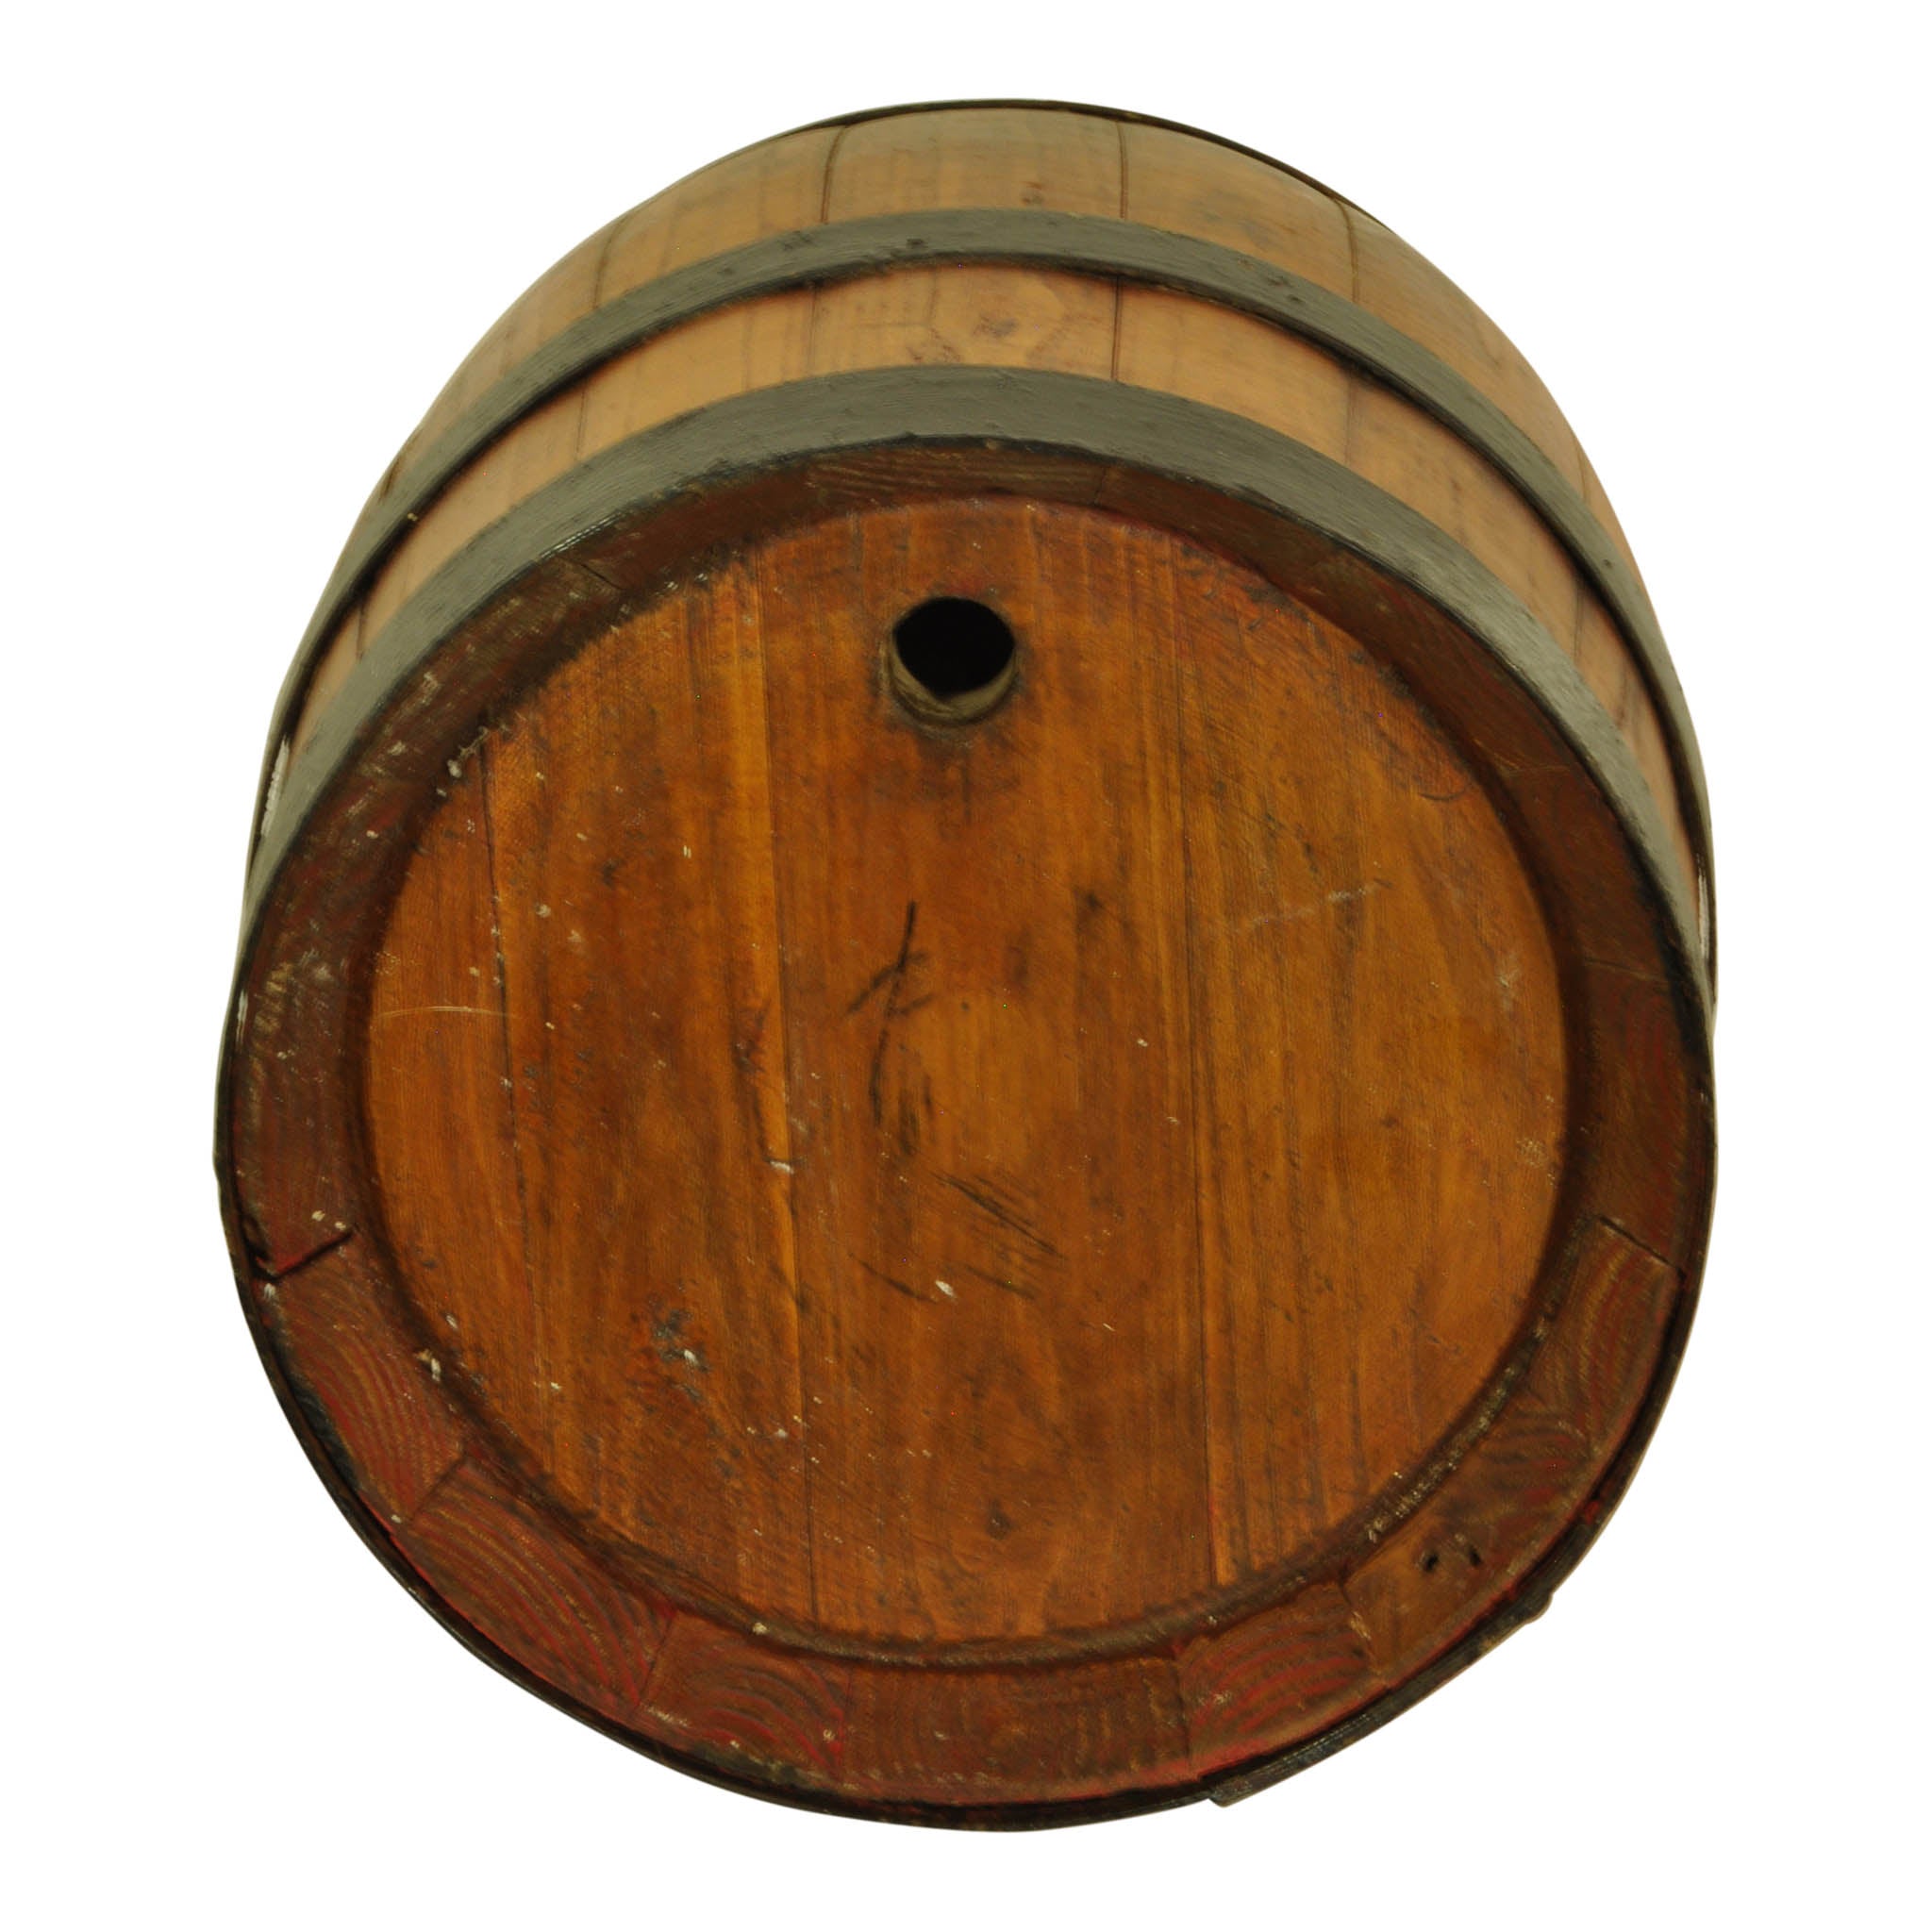 Small Wooden Wine Barrel